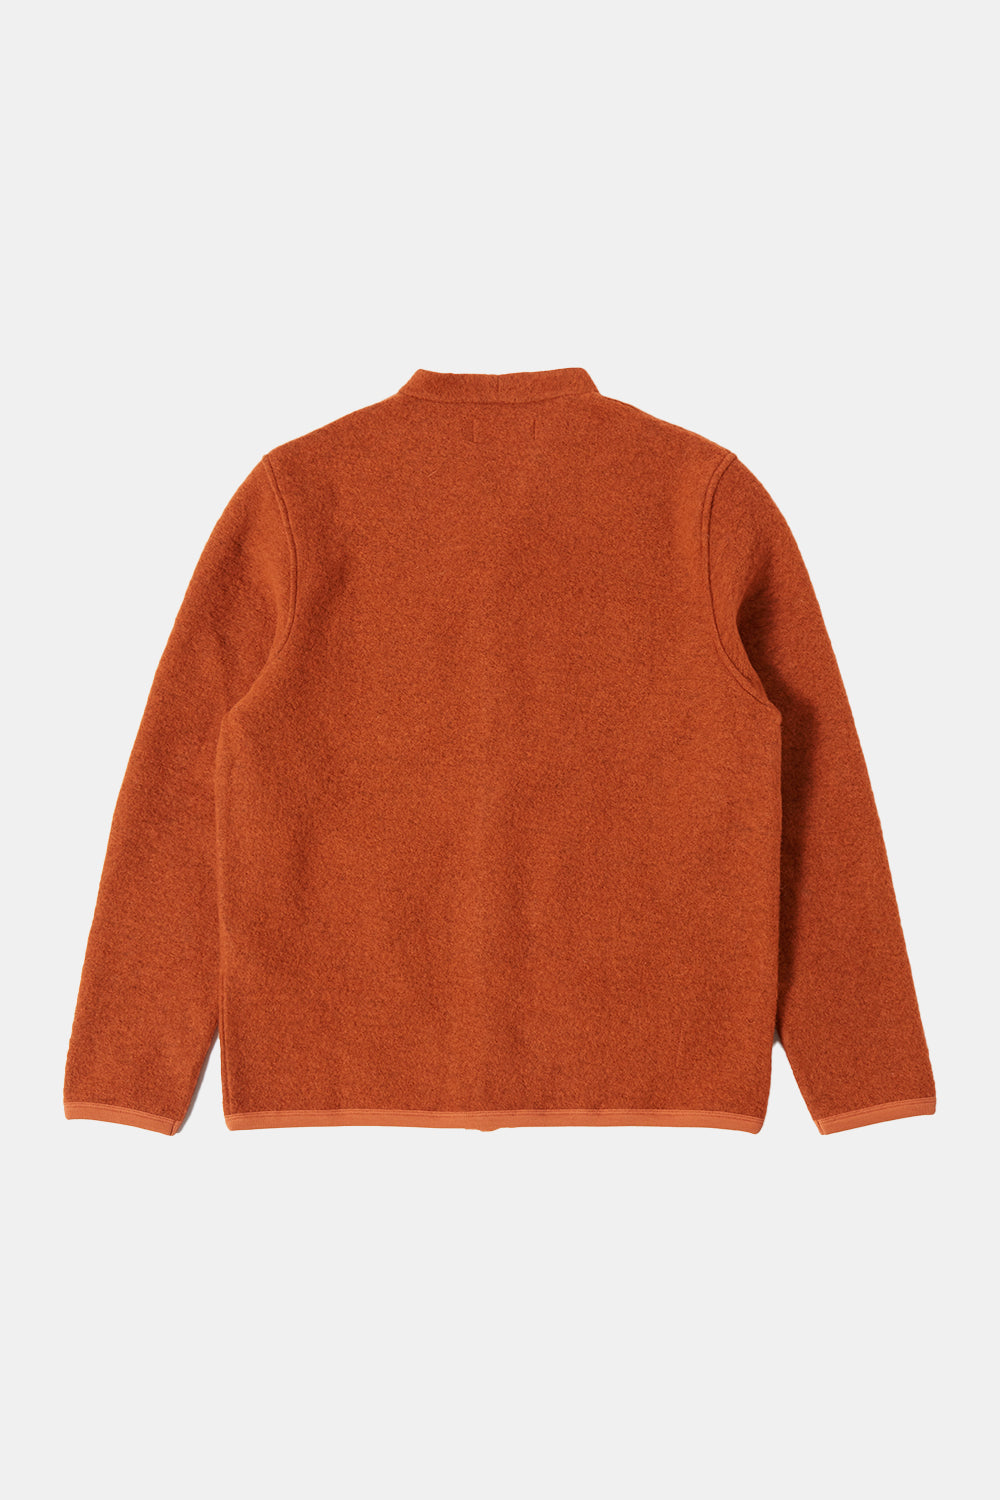 Universal Works Cardigan (Orange)